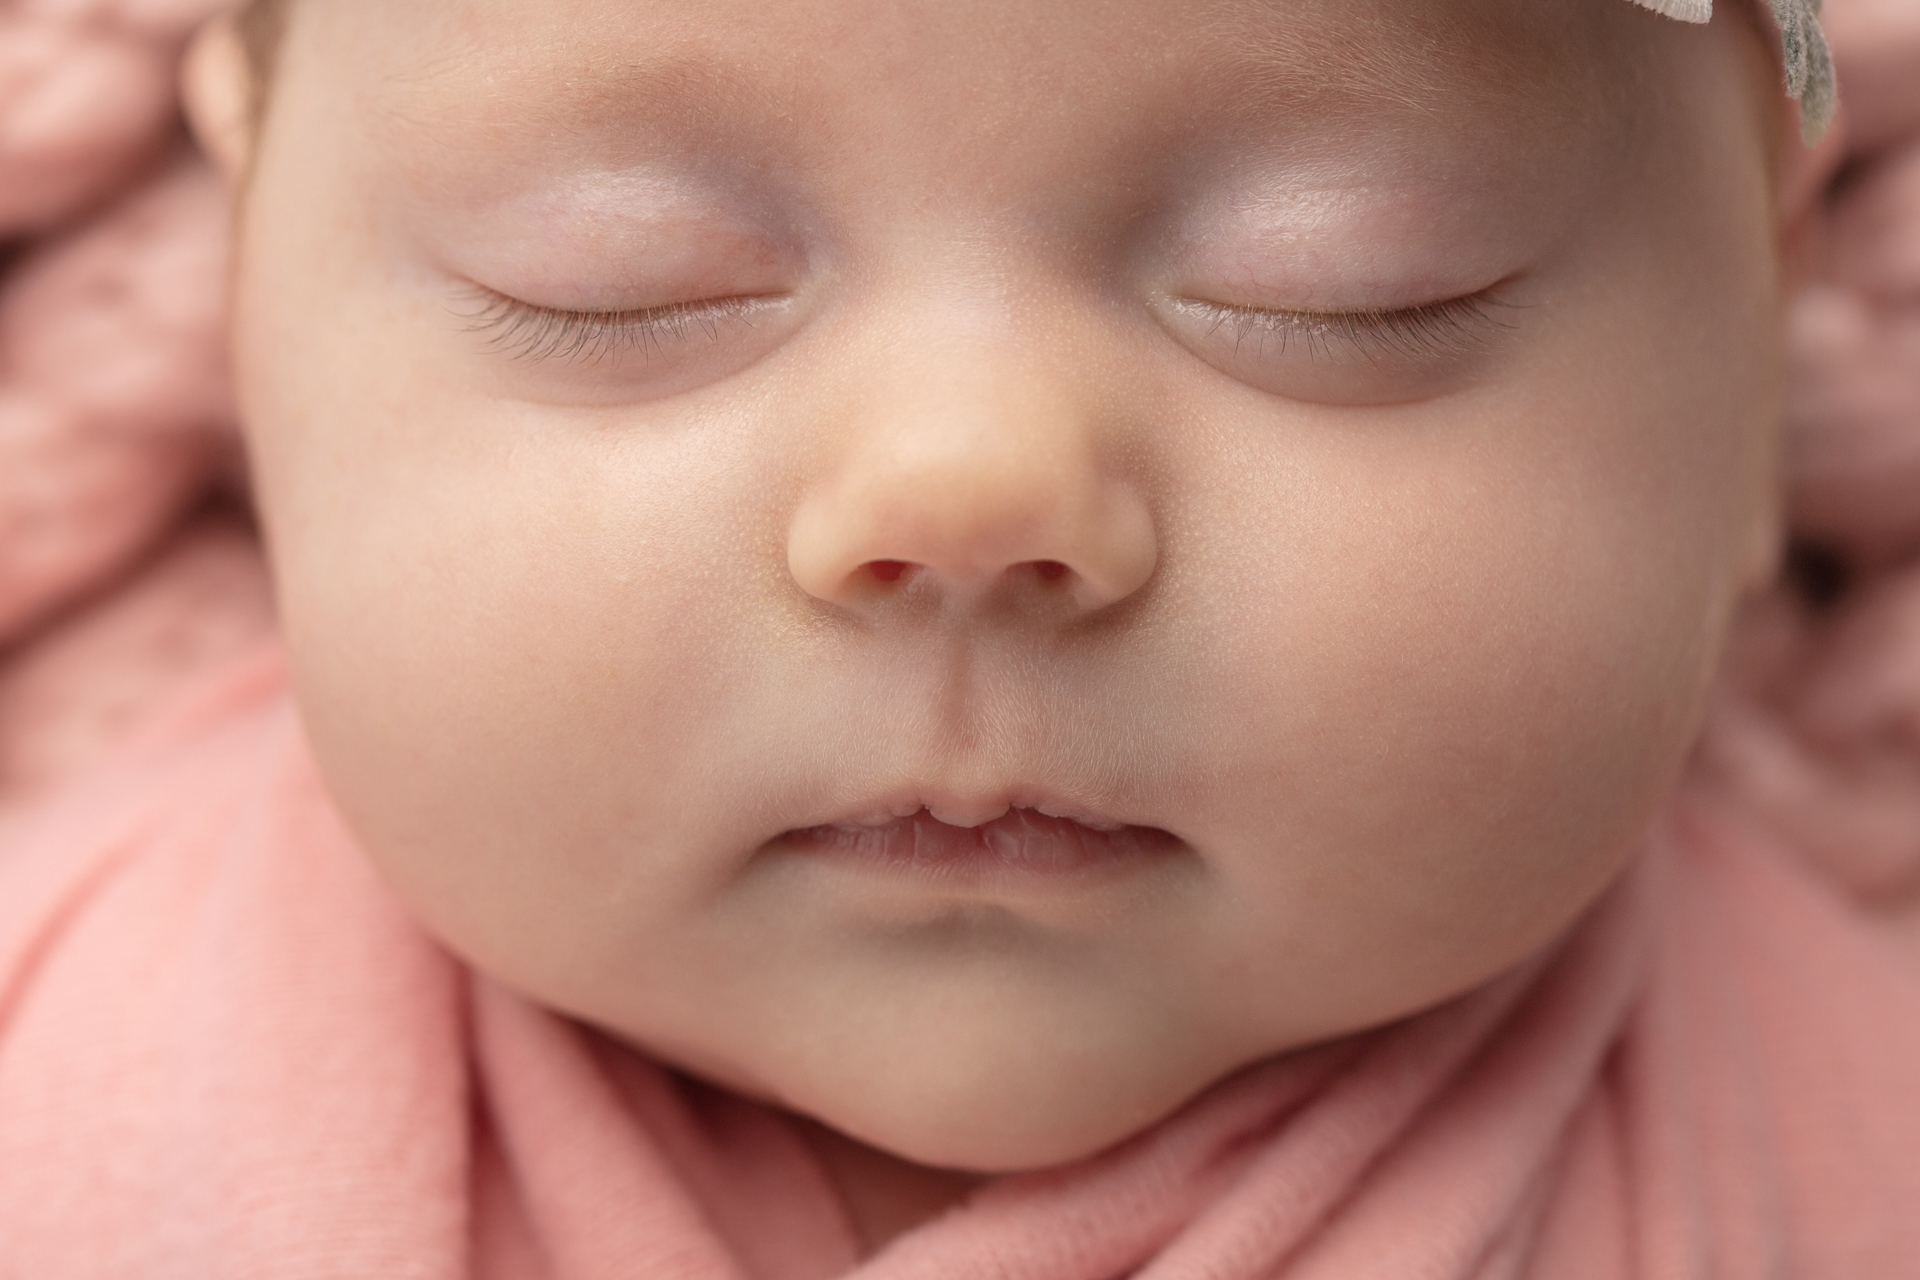 newborn macro photography; newborn baby girl details; eyelashes, baby nose, baby mouth